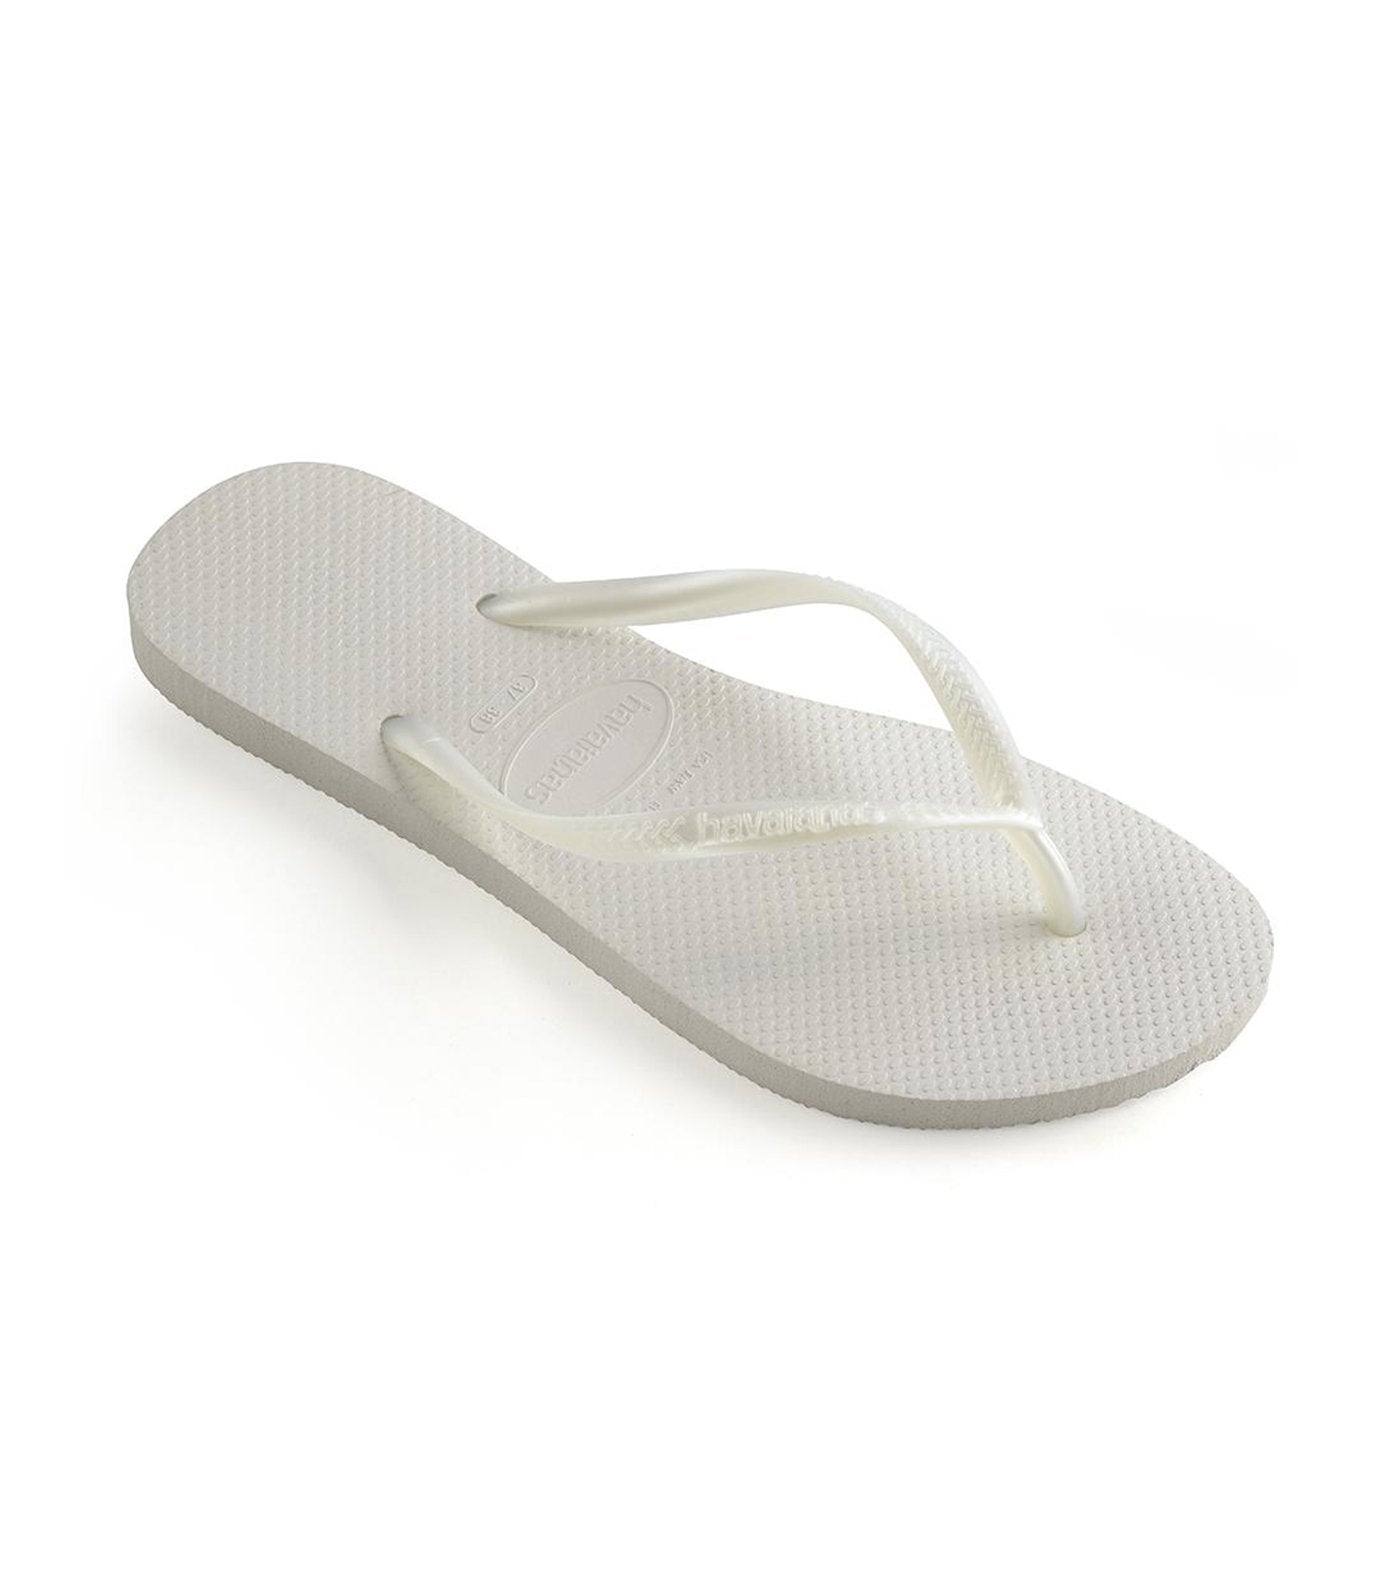 Havaianas Women's Slim Flip Flops - White 